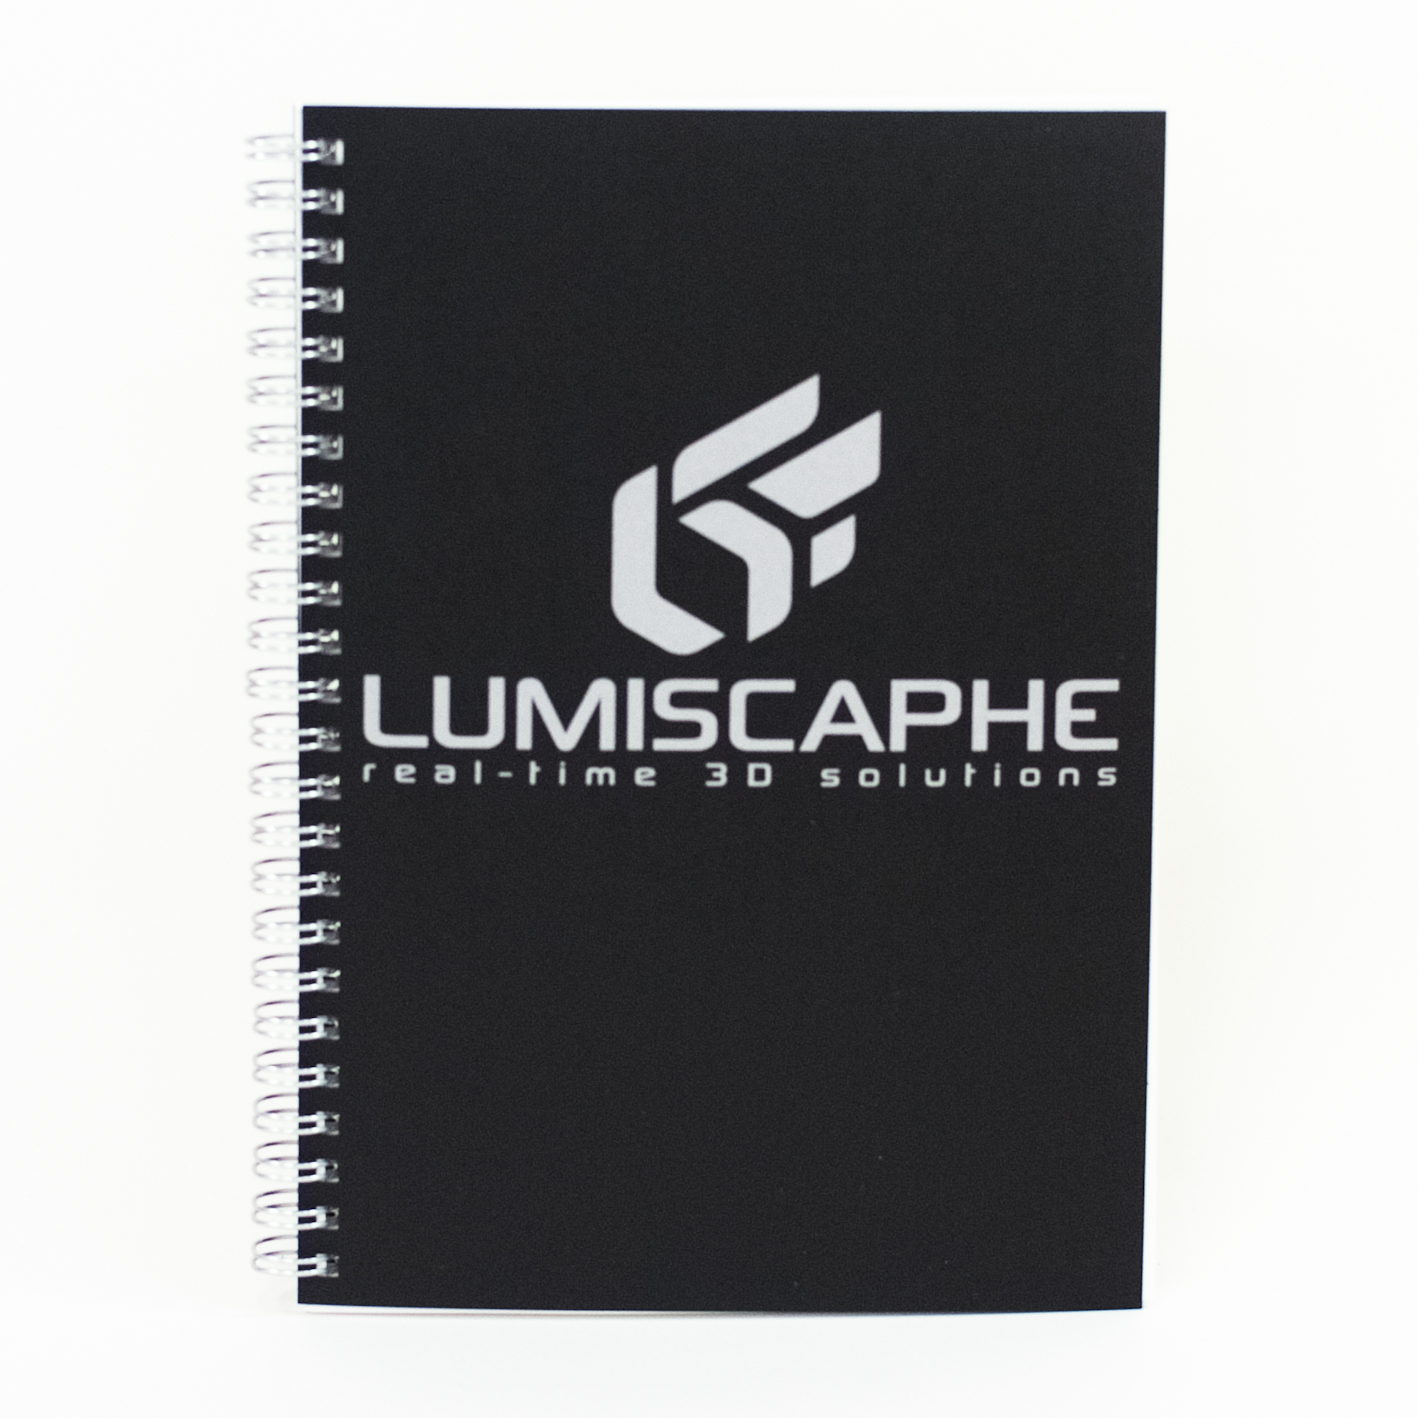 「LUMISCAPHE 様」製作のオリジナルノート